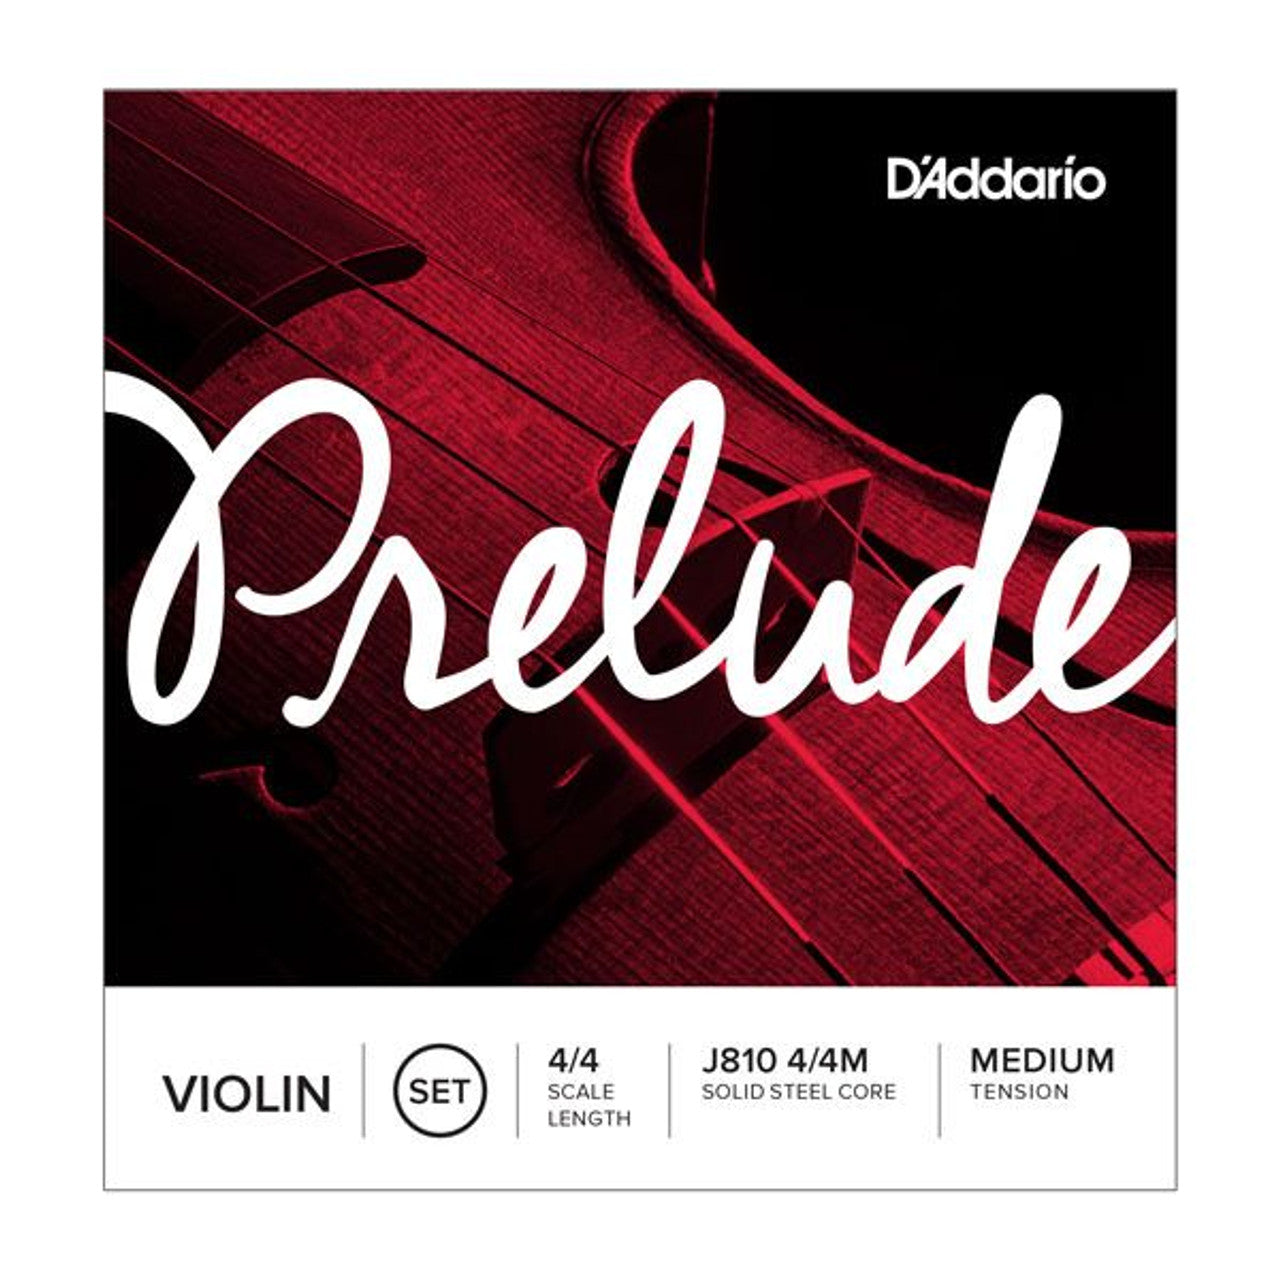 D'addario Violin String Medium Tension